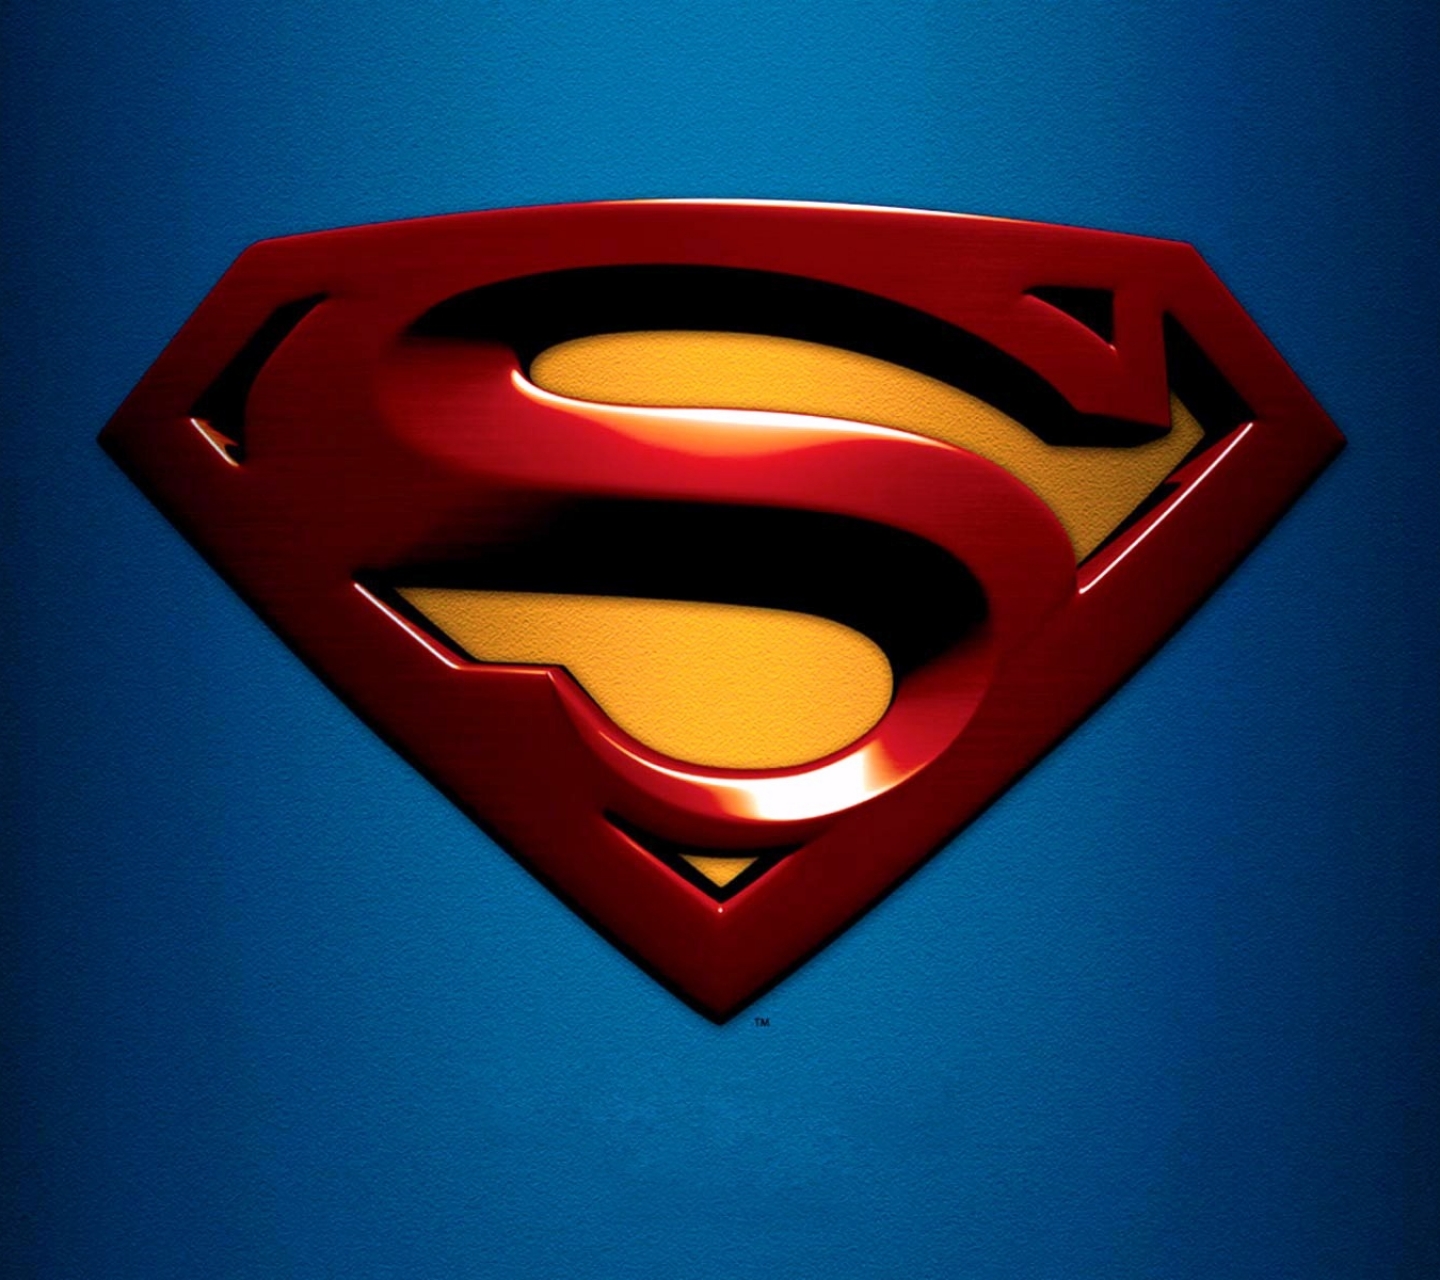 Скачать обои бесплатно Комиксы, Супермен, Логотип Супермена картинка на рабочий стол ПК